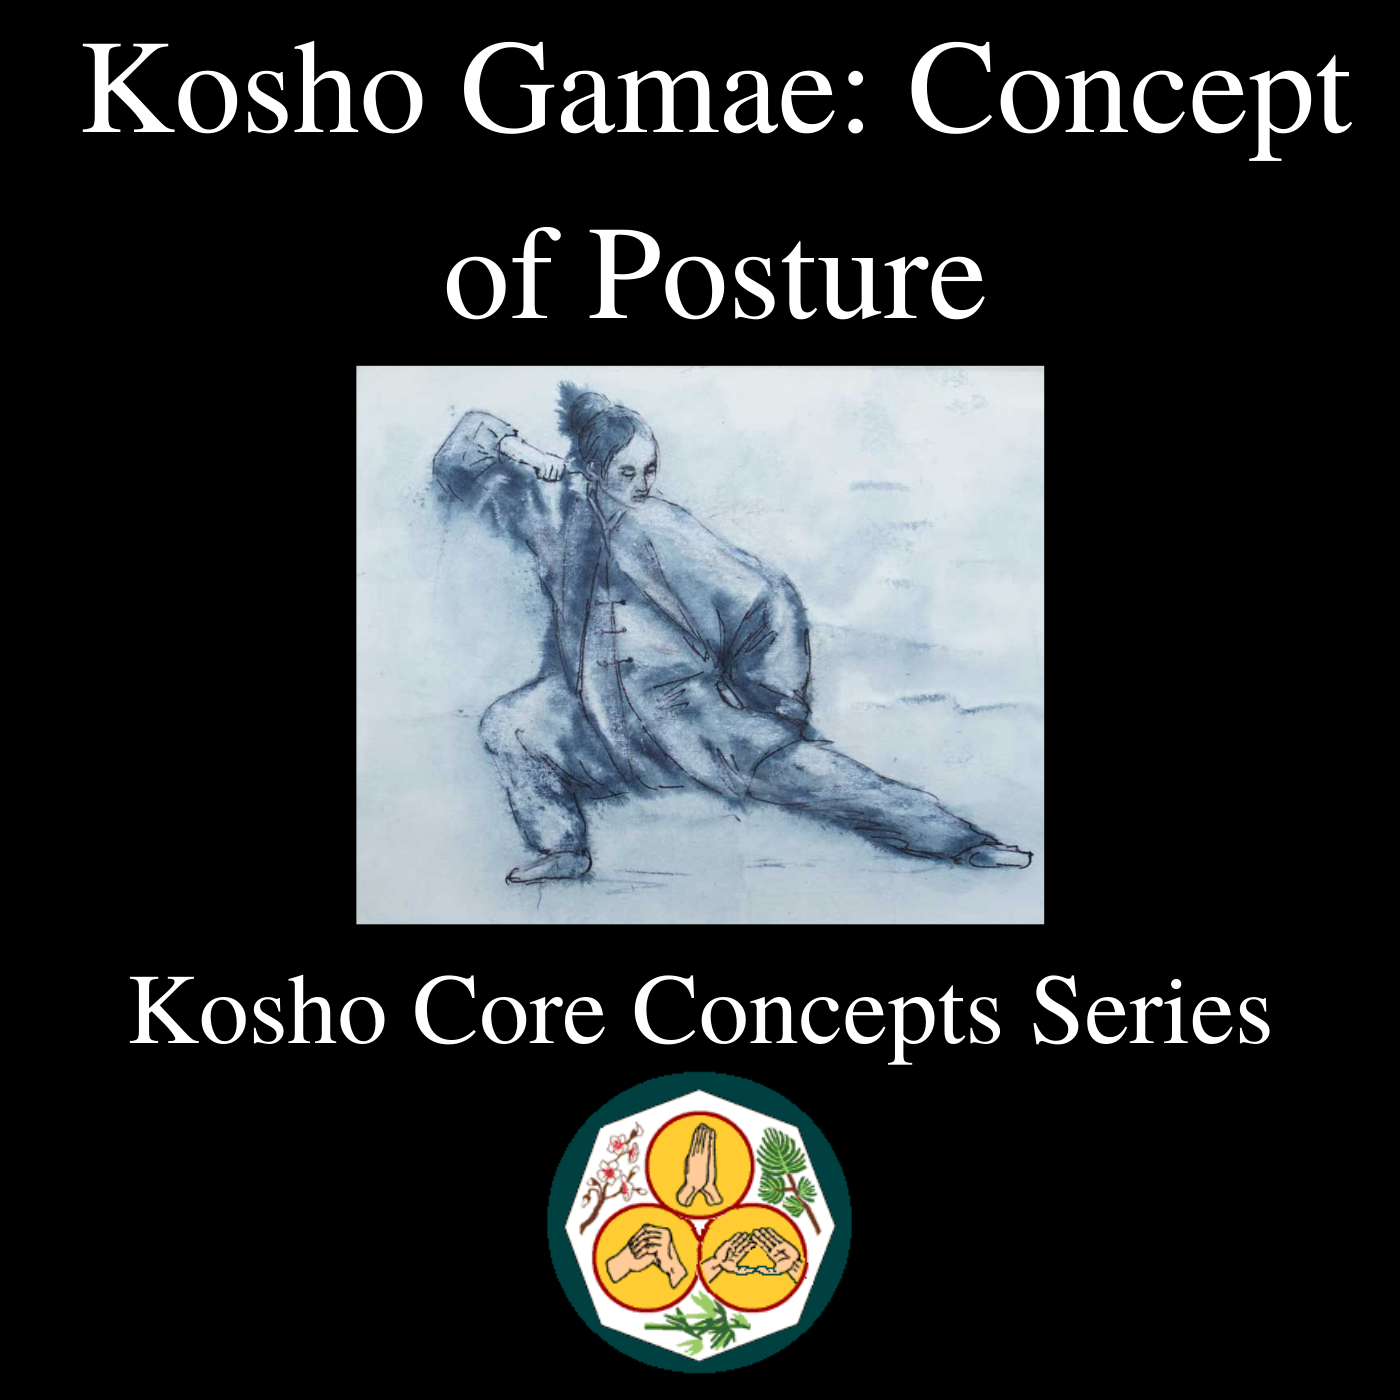 * Kosho Gamae Concept of Posture